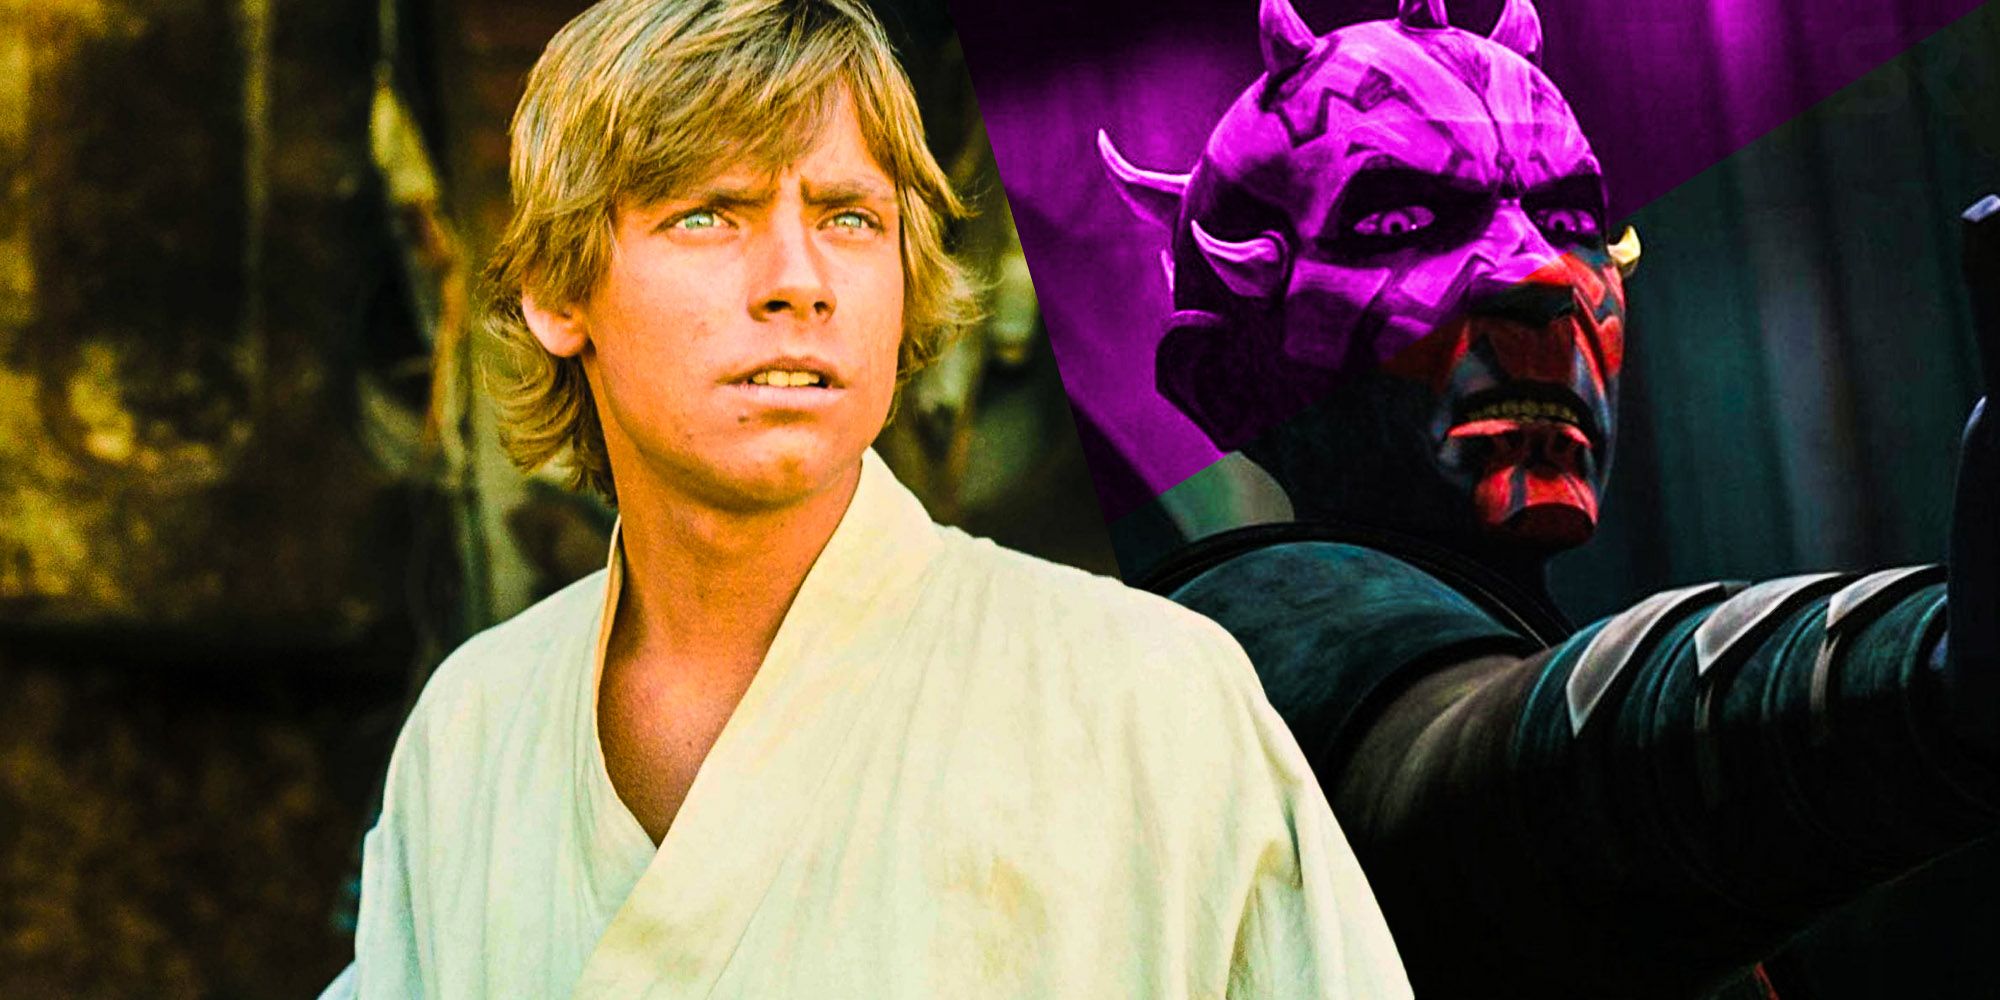 Darth maul believed Luke Skywalker would avenger him